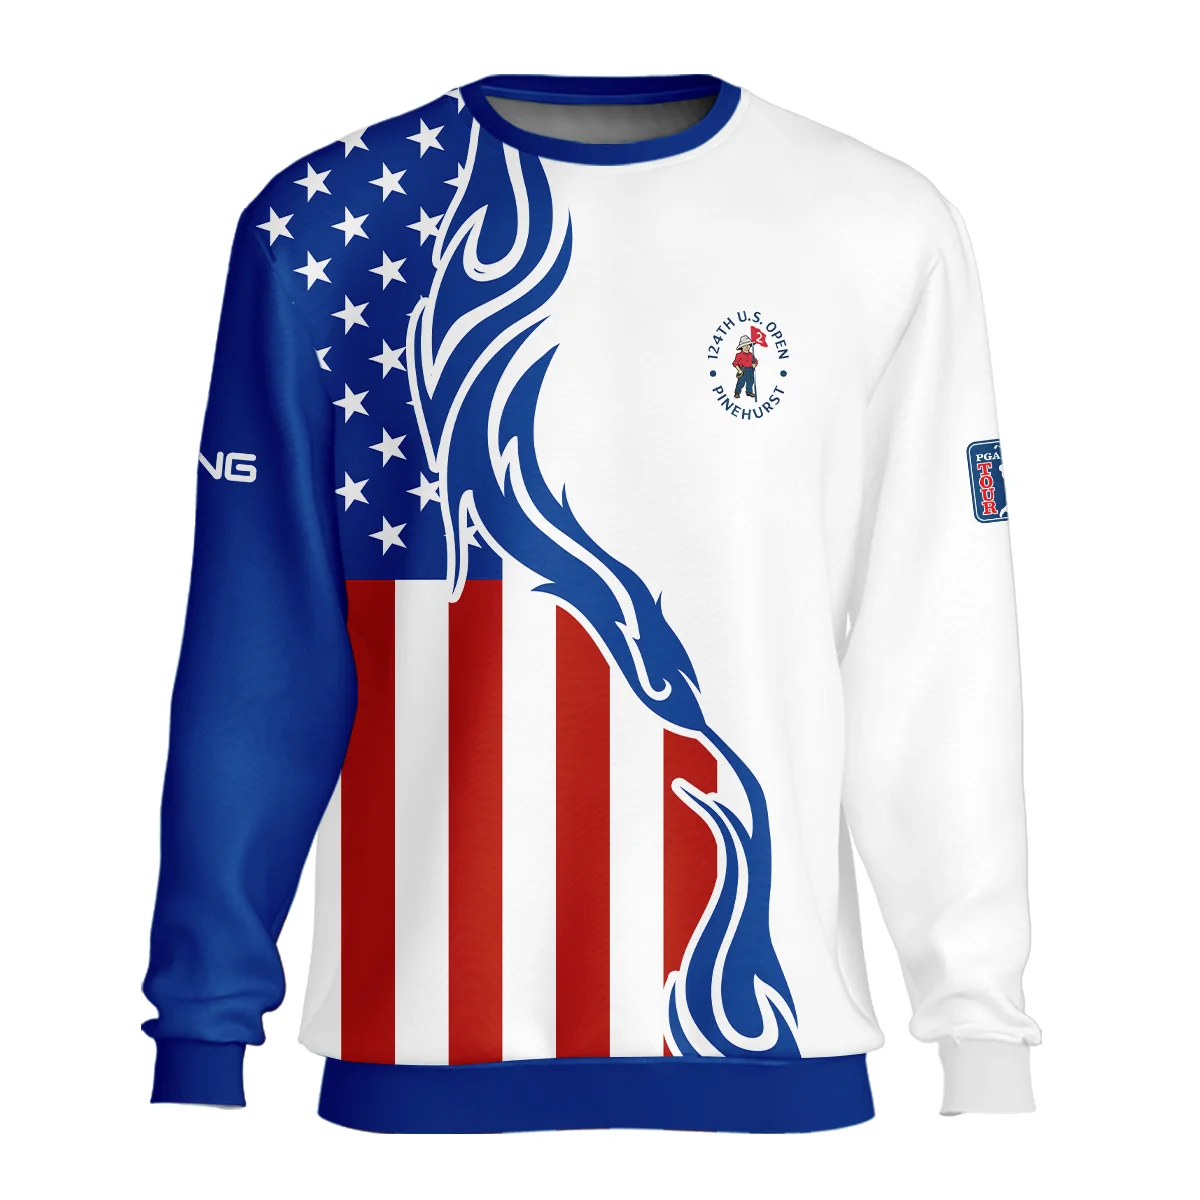 Golf Sport Ping 124th U.S. Open Pinehurst Unisex Sweatshirt USA Flag Pattern Blue White All Over Print Sweatshirt